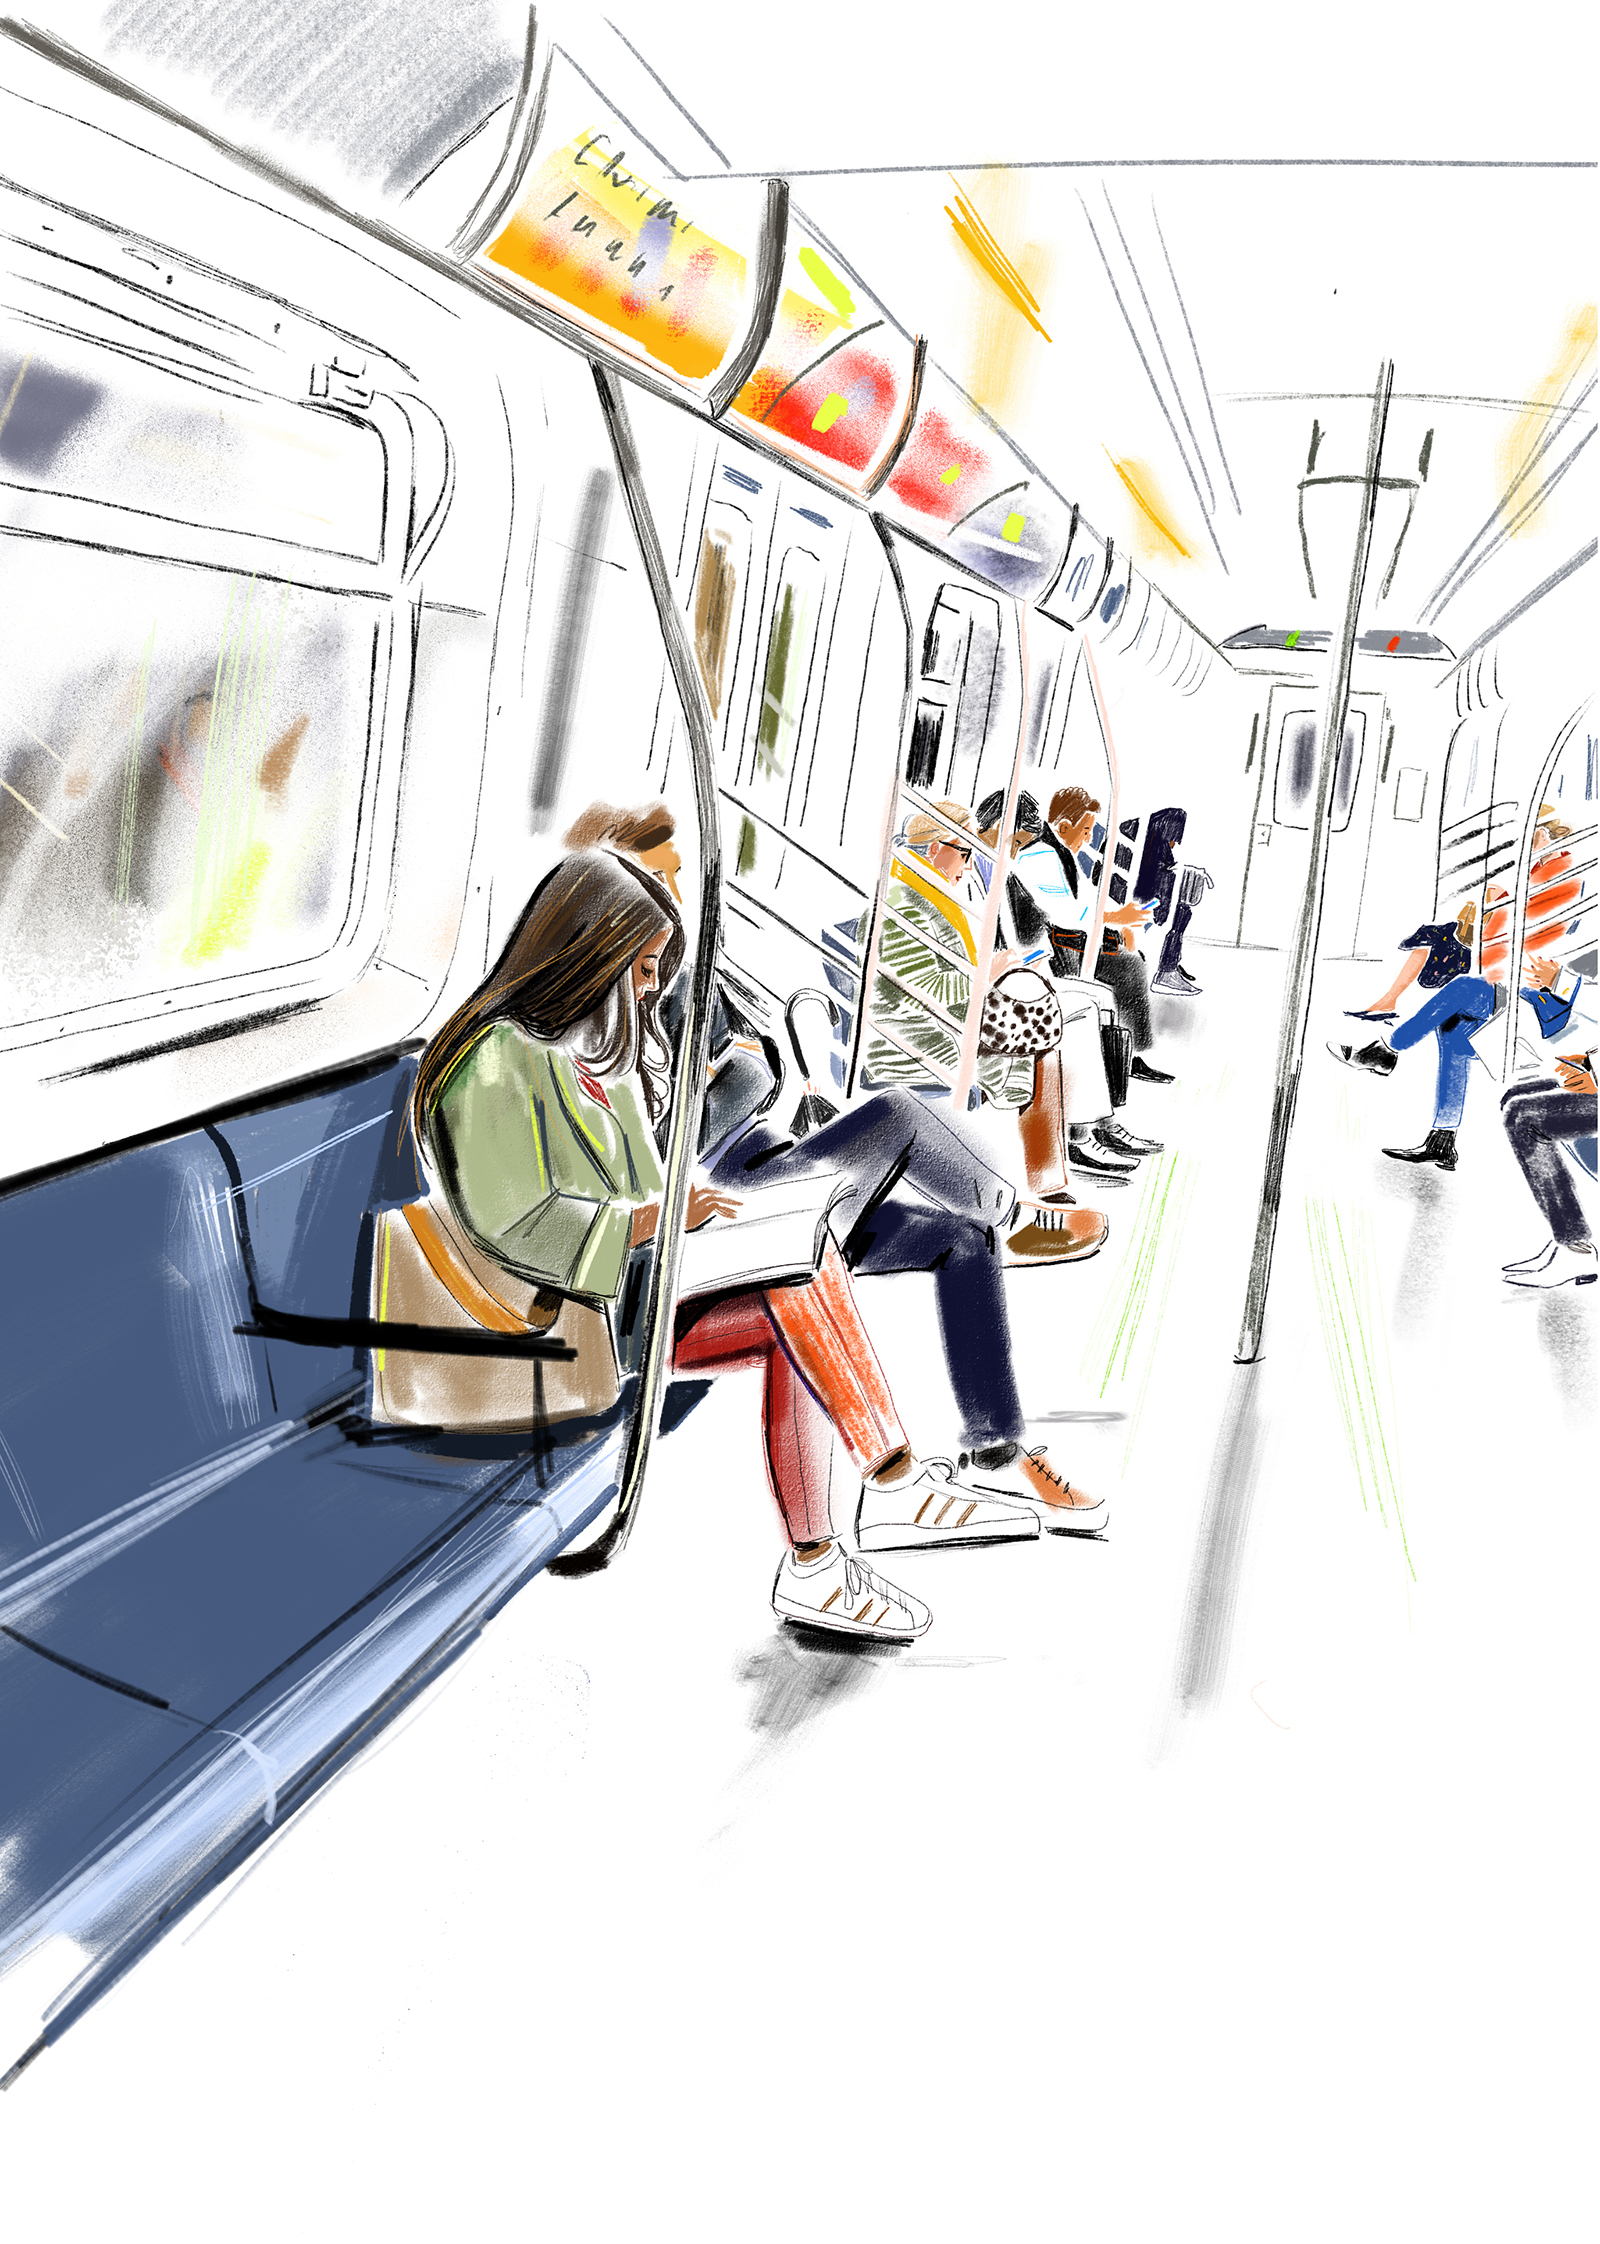 Lucy+Truman+Travel+illustration+New+York+Subway+Illustration+sketchbook+rendering+editorial+Art+illustrator+art+journal+coloured+pencils